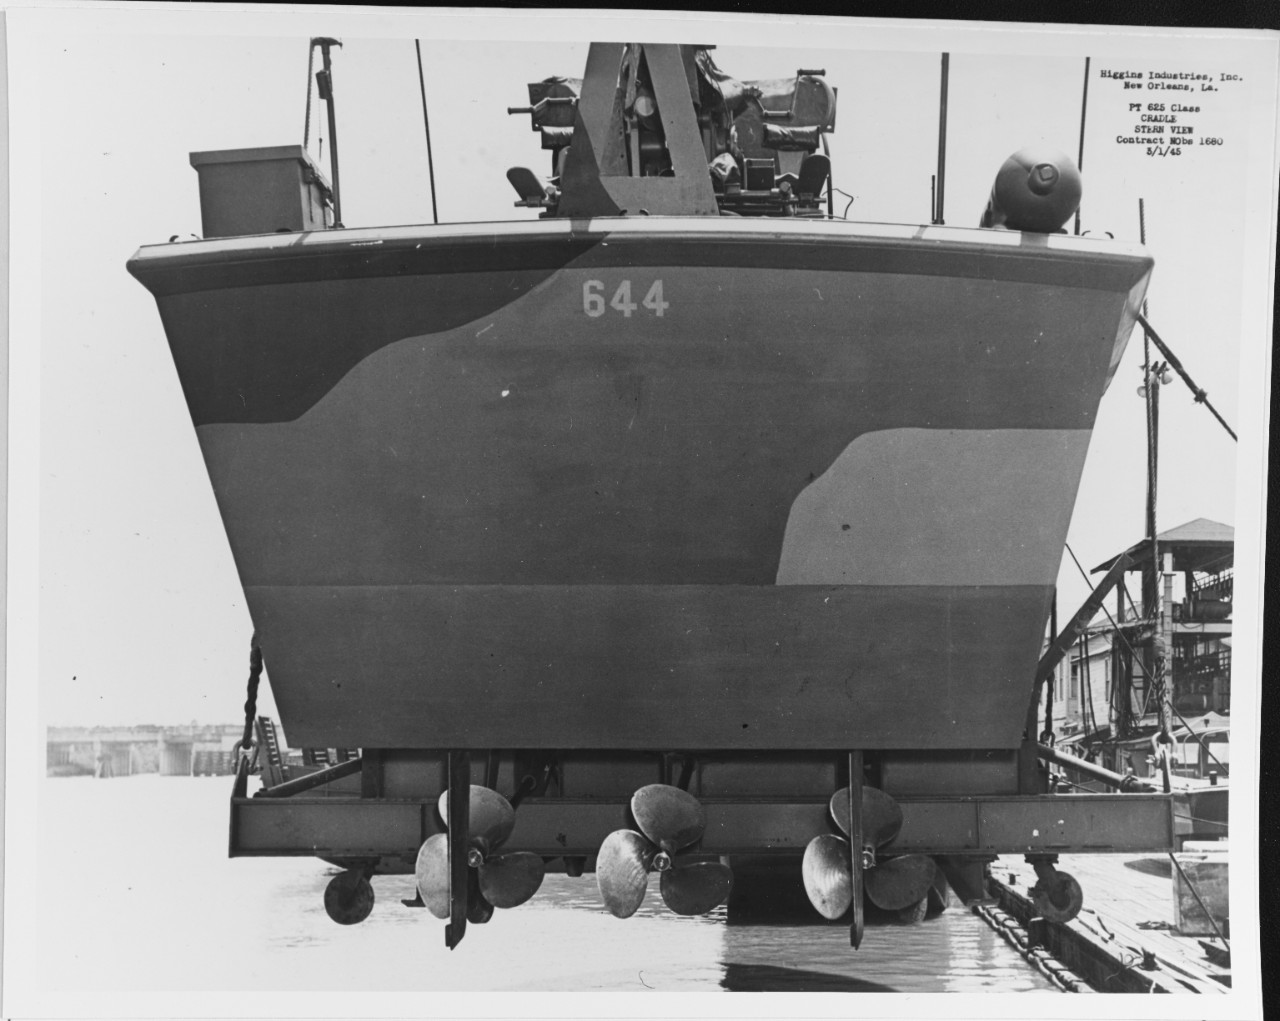 USS PT-644